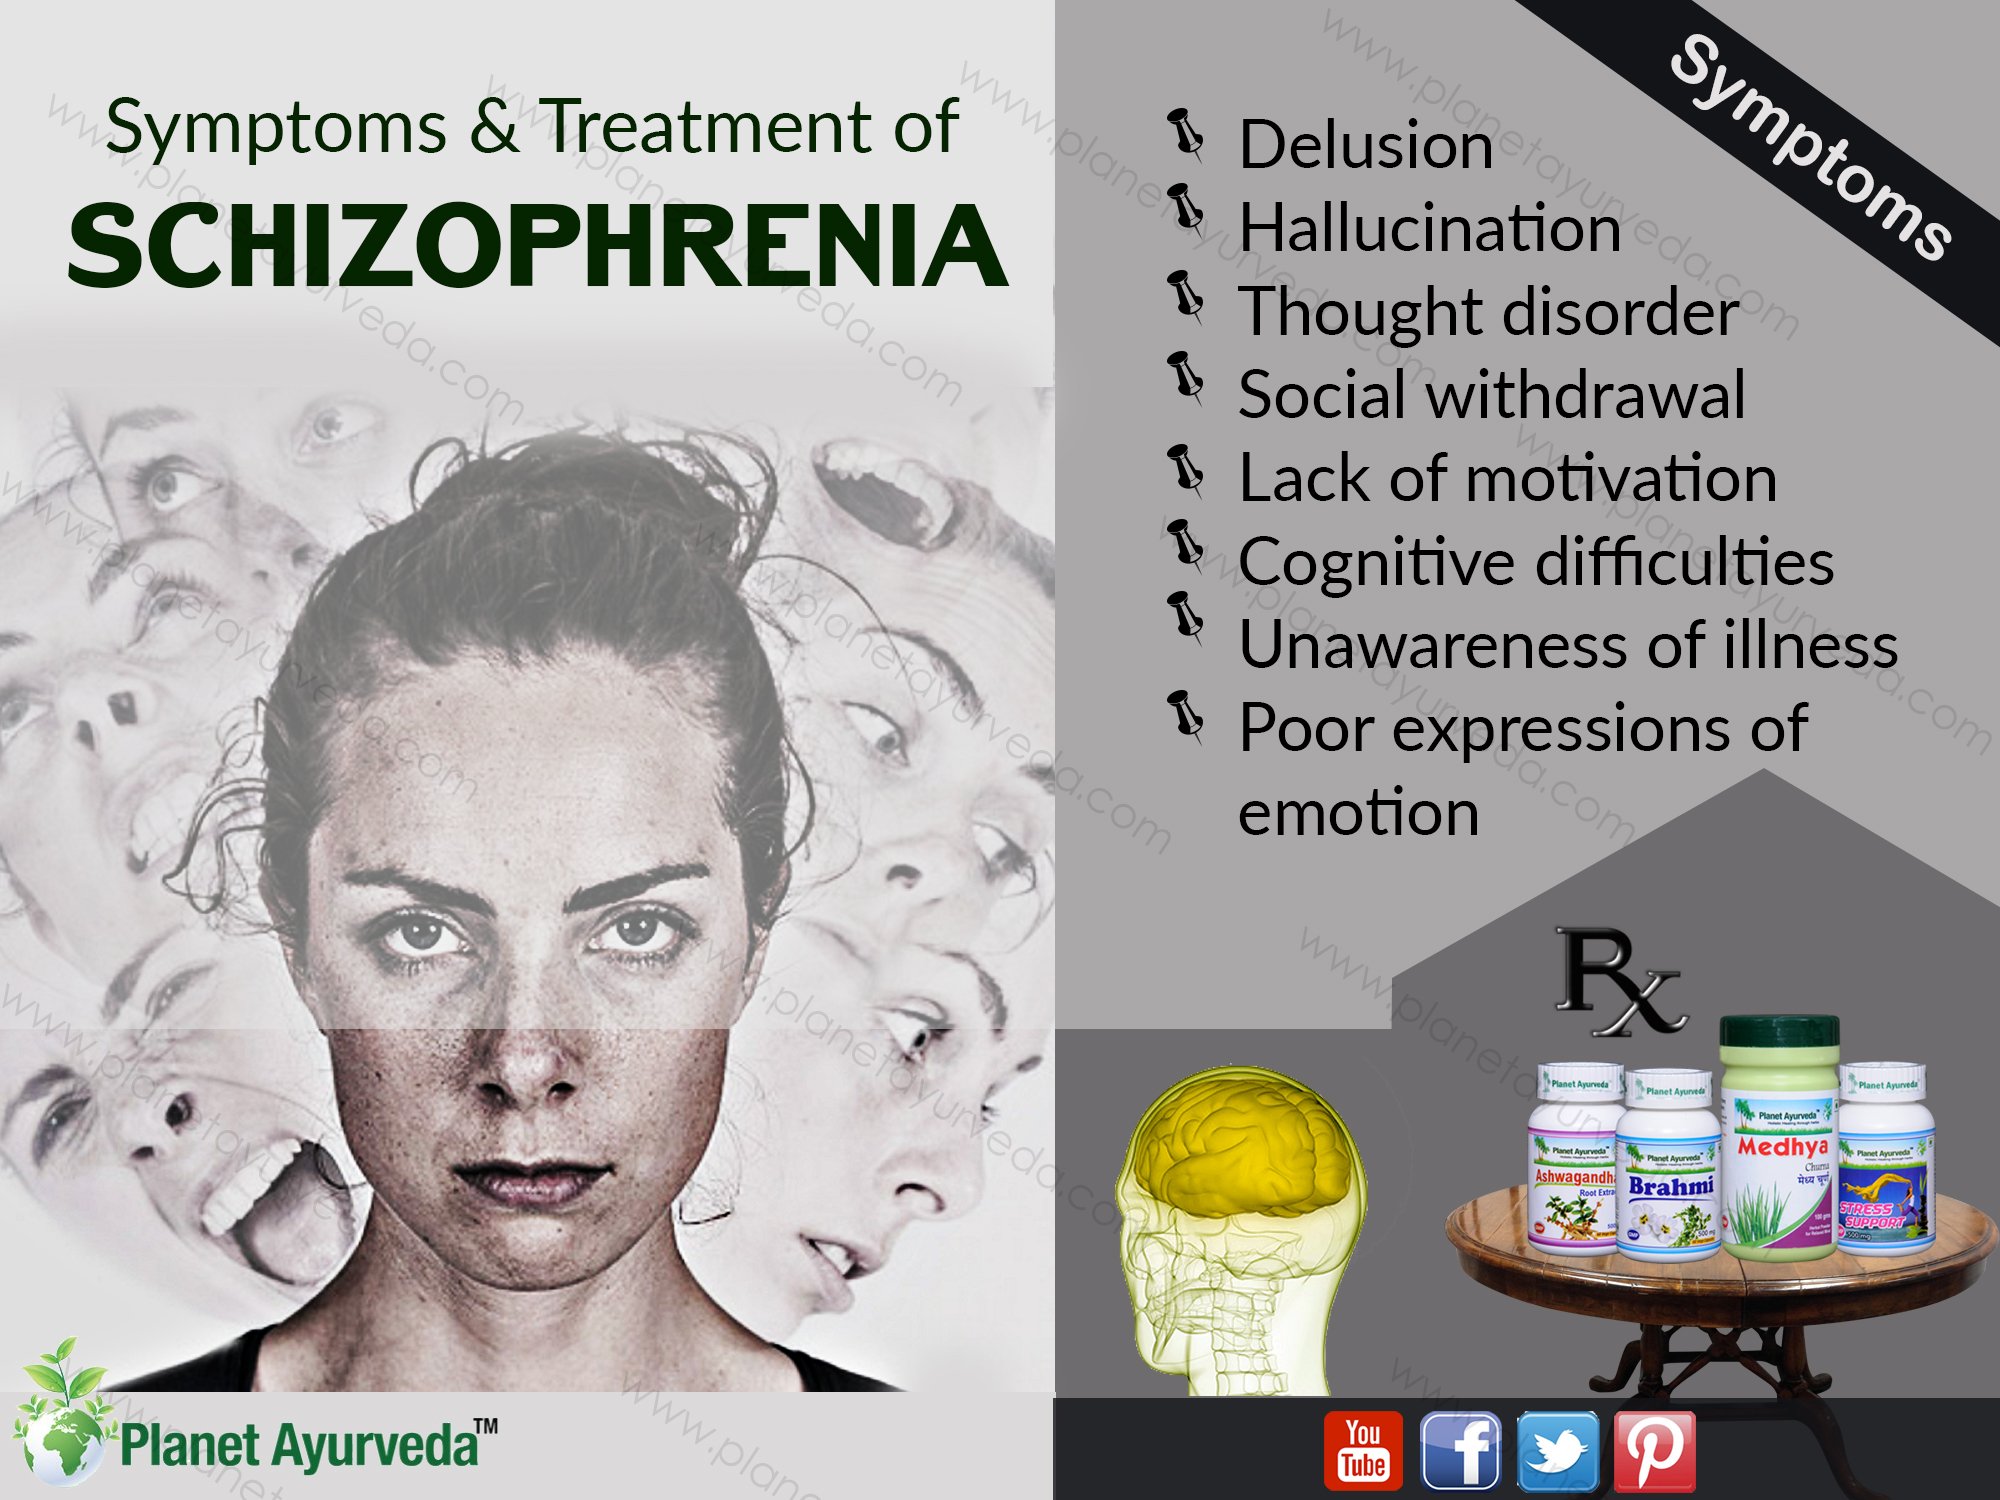 Treatment of Schizophrenia in Ayurveda